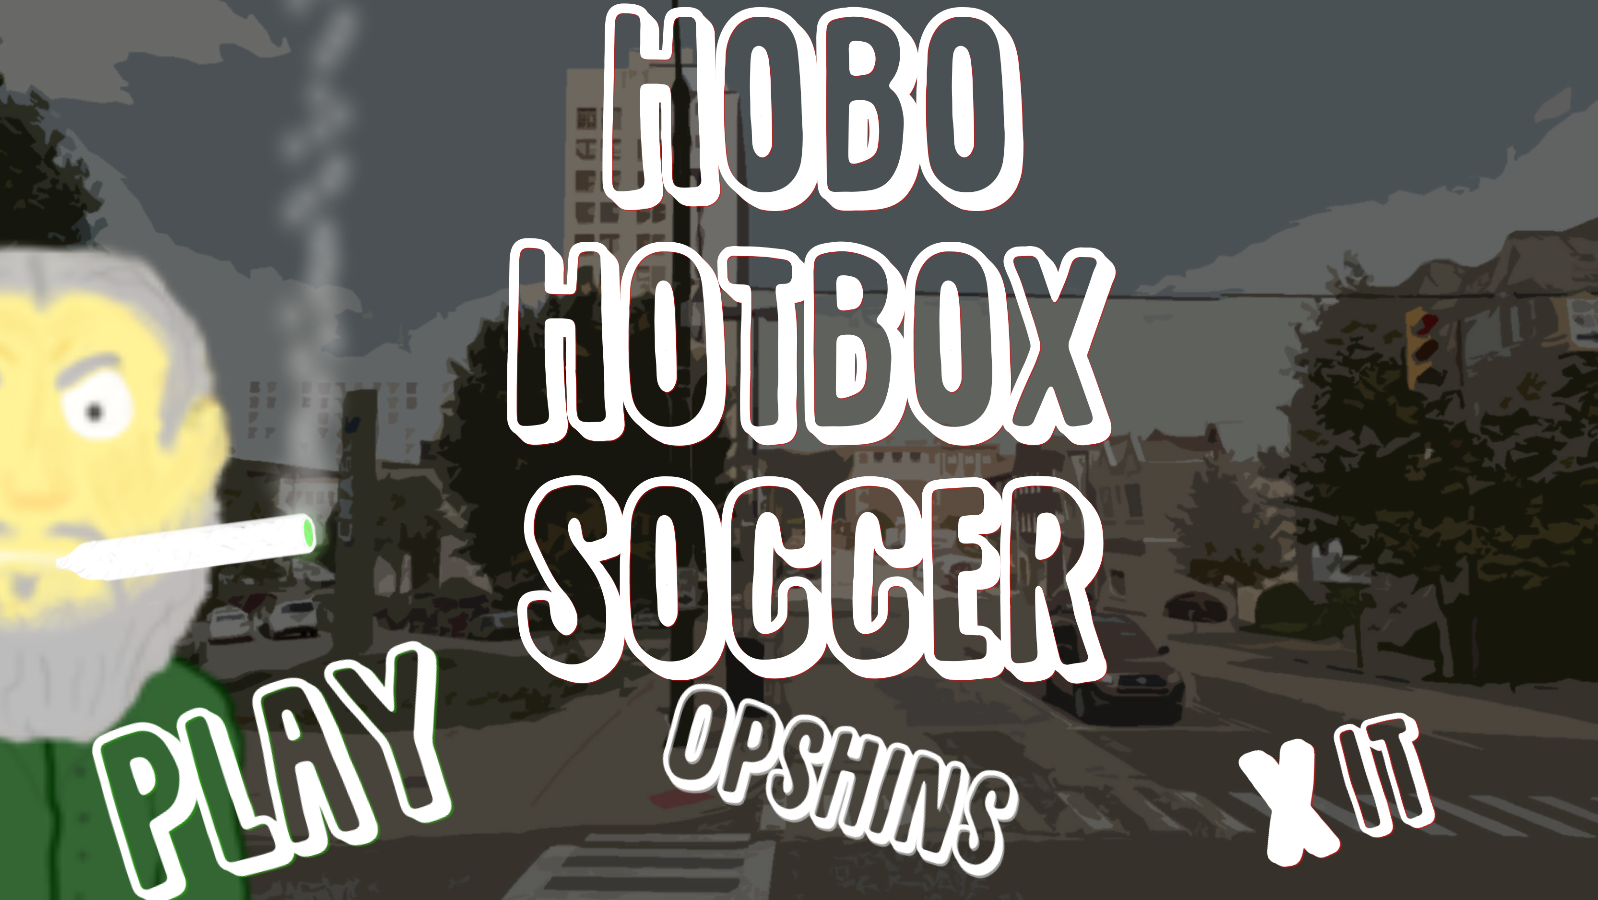 HoboHotboxSoccer